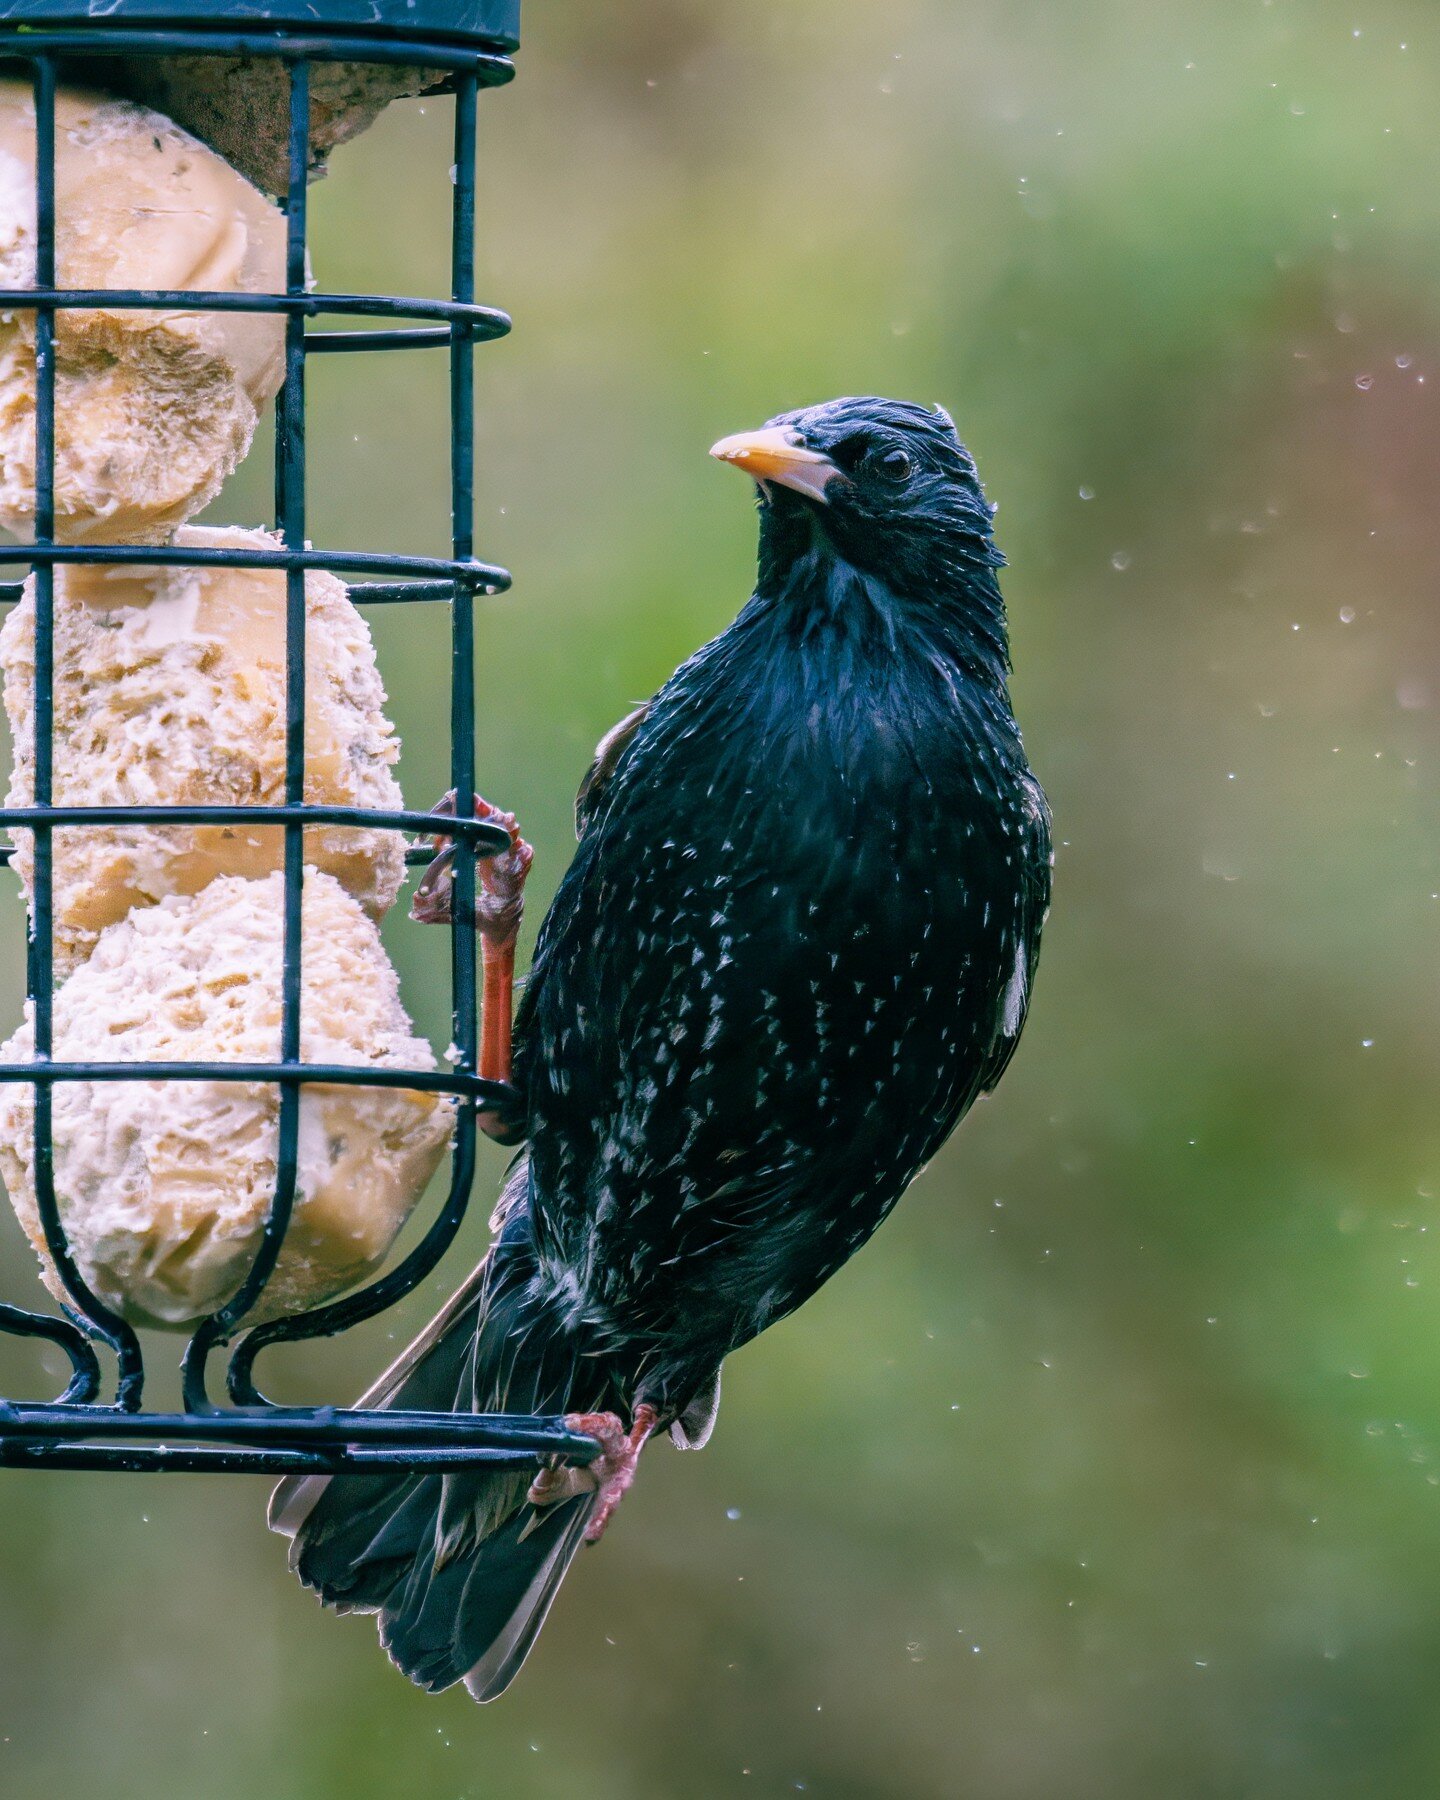 I'm Starling in the rain!

#commonstarling #bird #birdphotography #uk #ukwildlife #ukgardens #bird_captures #your_best_birds #feather_perfection #birdperfection #canonr7 #canonr7wildlife